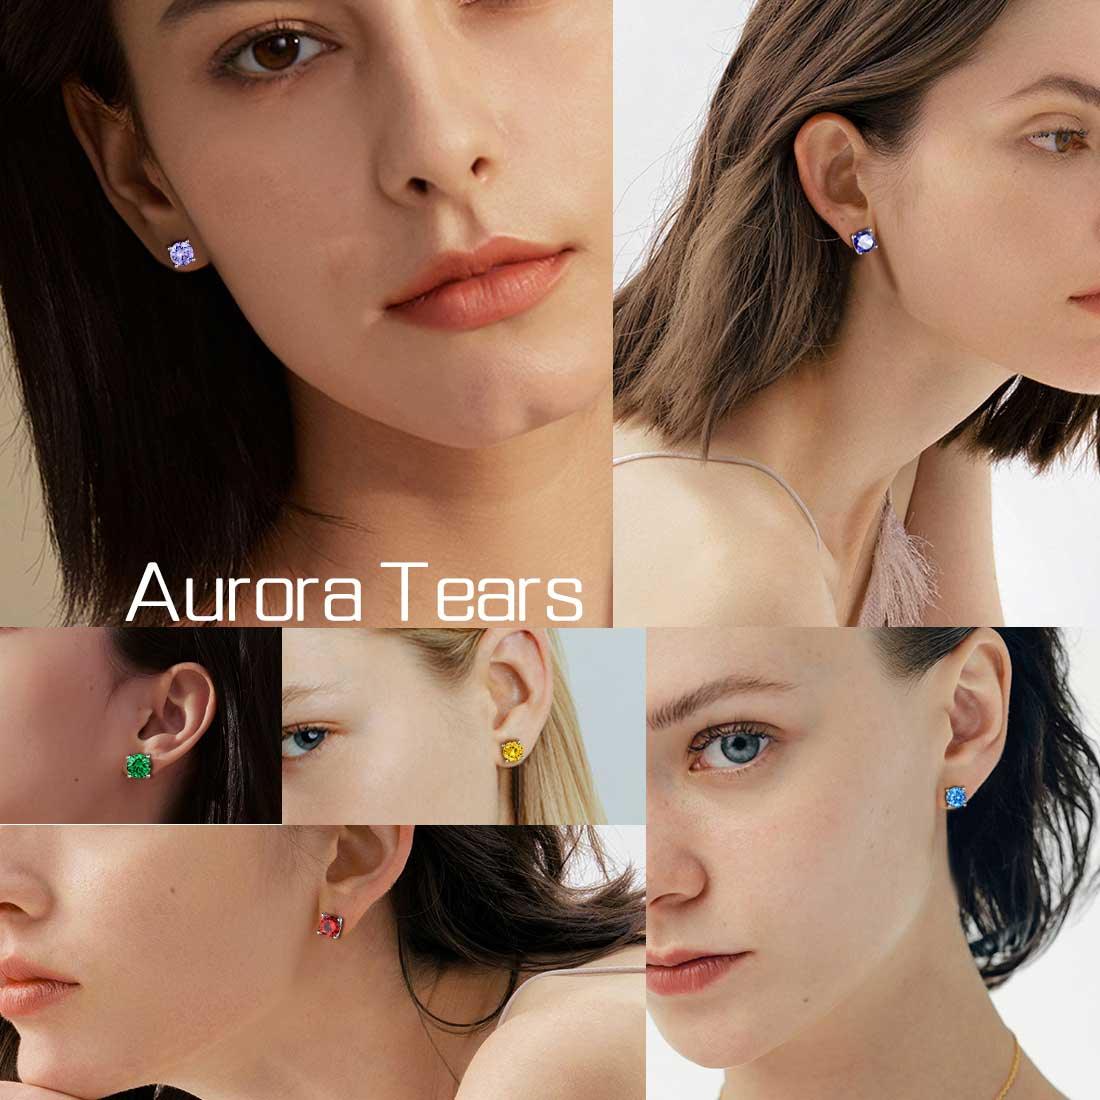 Round Birthstone December Tanzanite Earrings Sterling Silver - Earrings - Aurora Tears